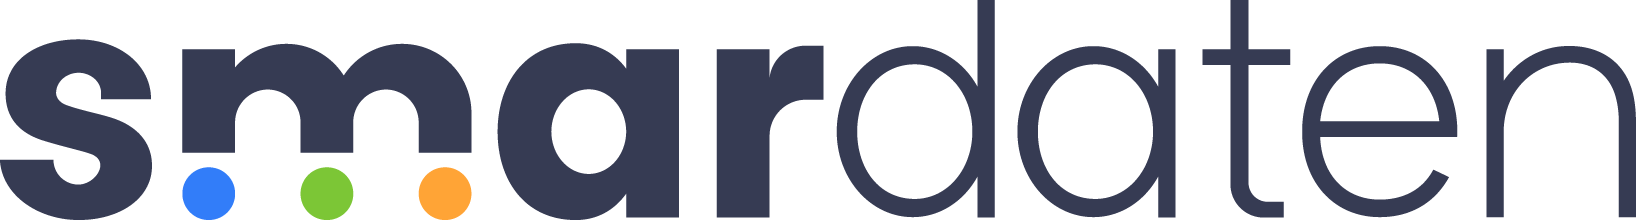 smardaten logo